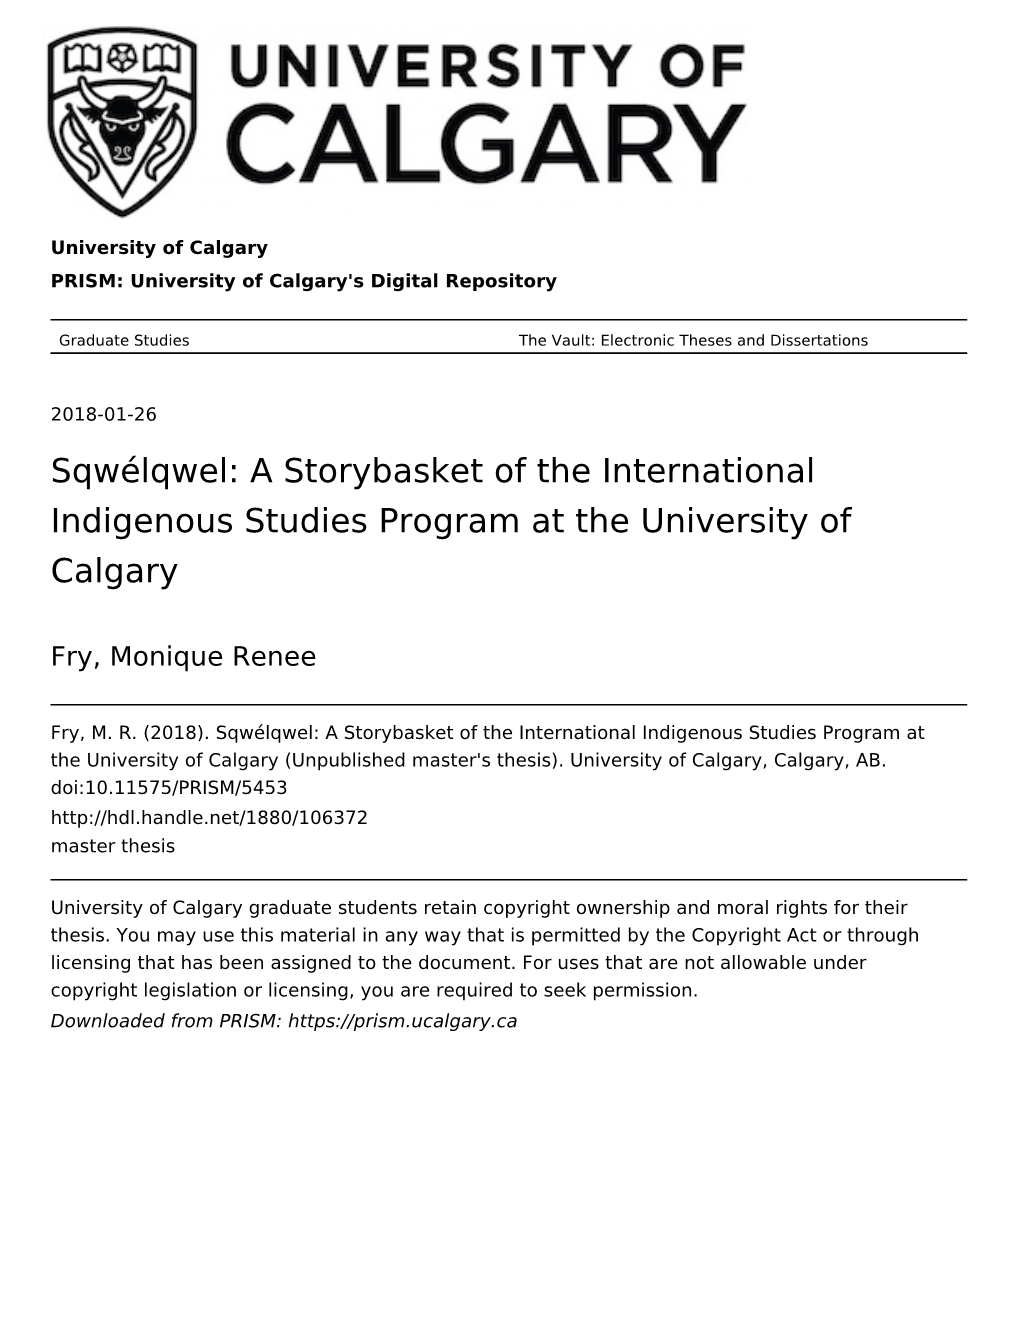 Sqwélqwel: a Storybasket of the International Indigenous Studies Program at the University of Calgary